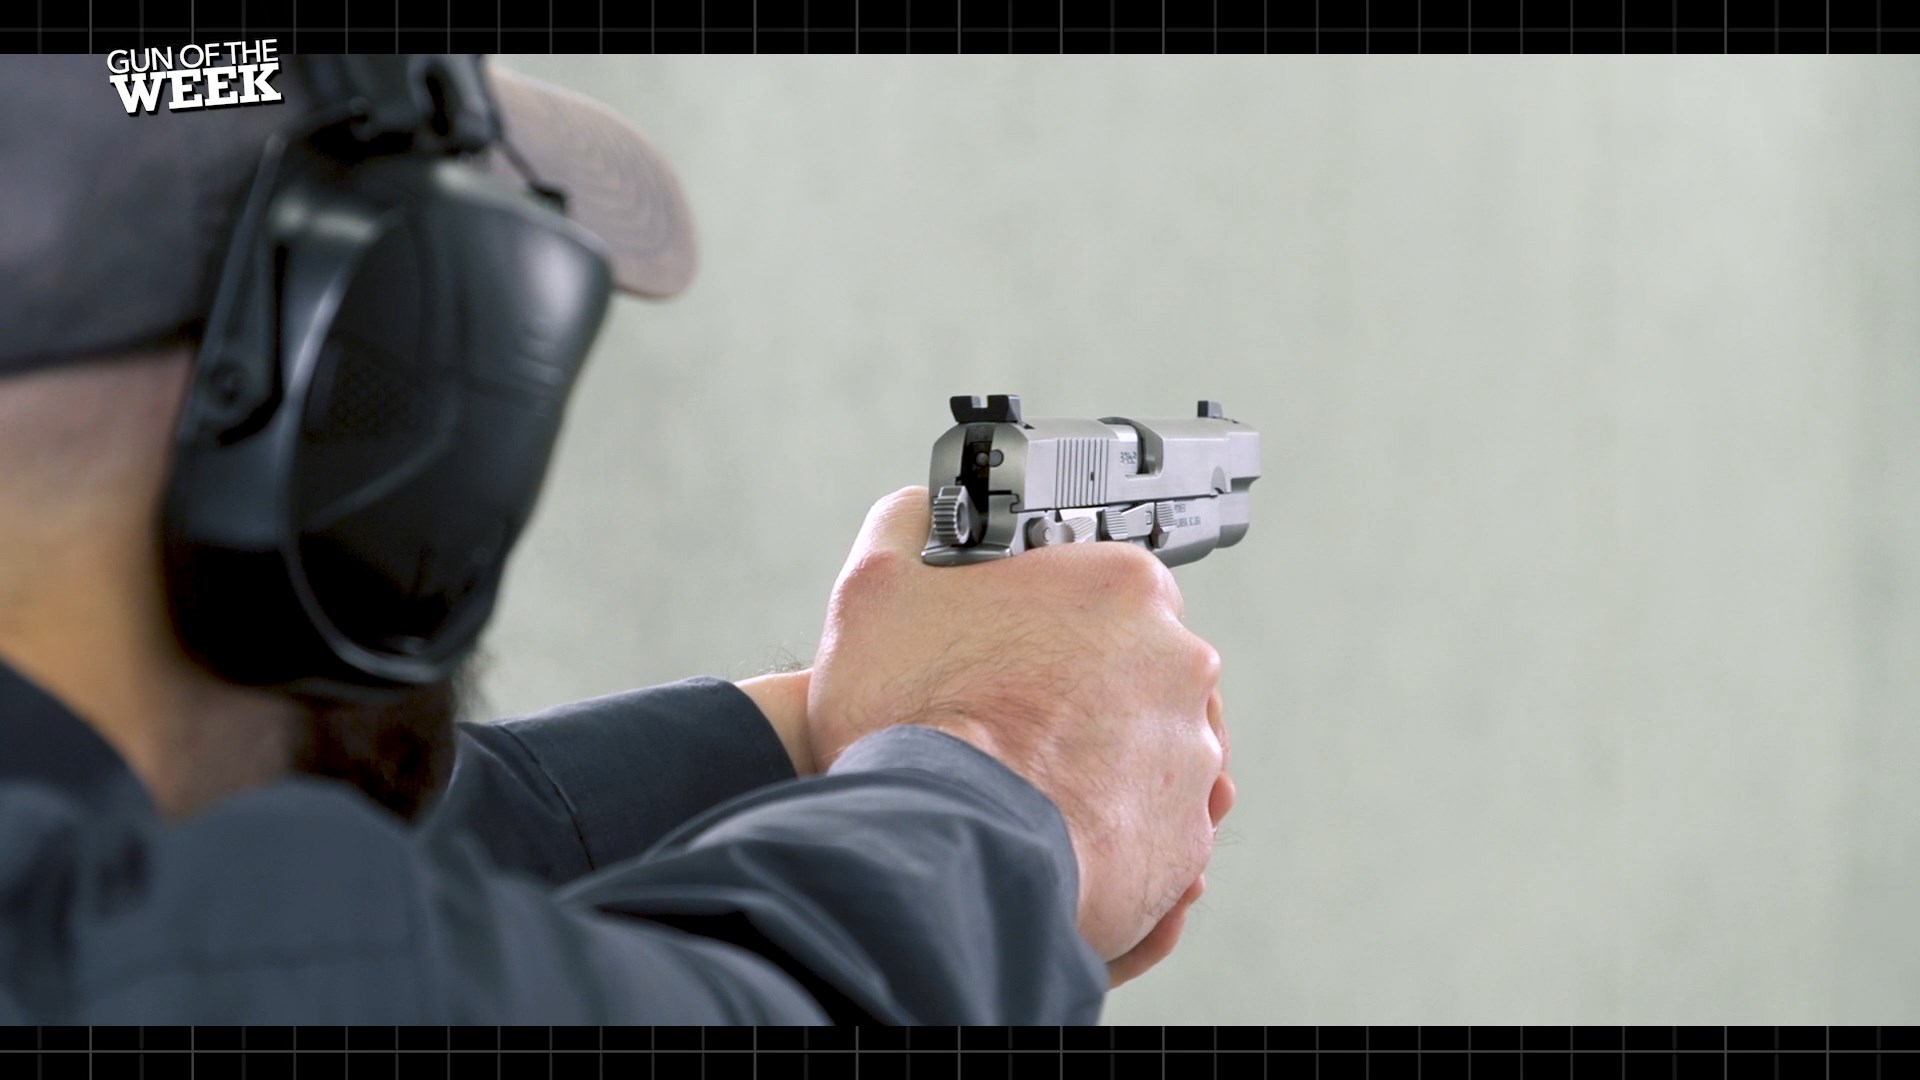 over-the-shoulder view of man shooting fn america high power pistol stainless steel gun 9 mm indoor